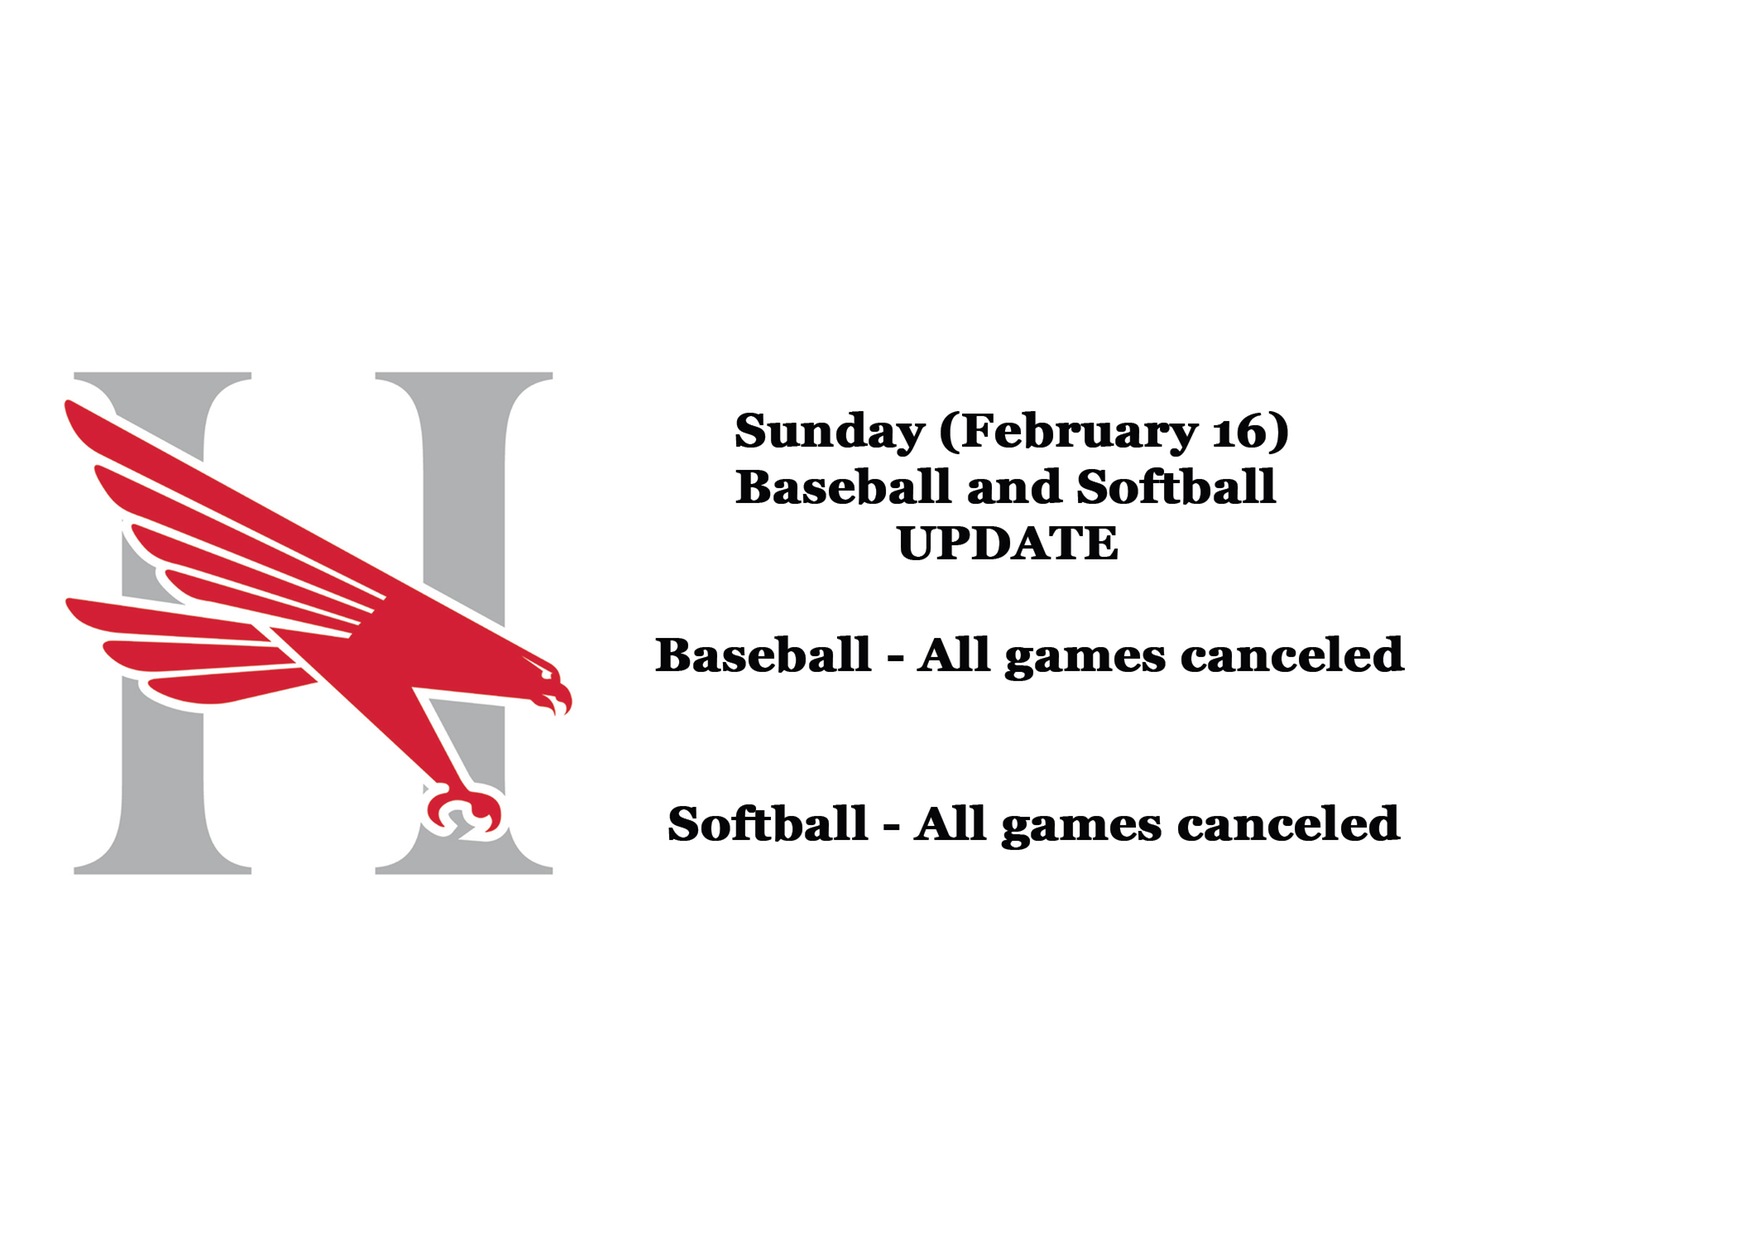 Sunday’s home baseball and softball games canceled